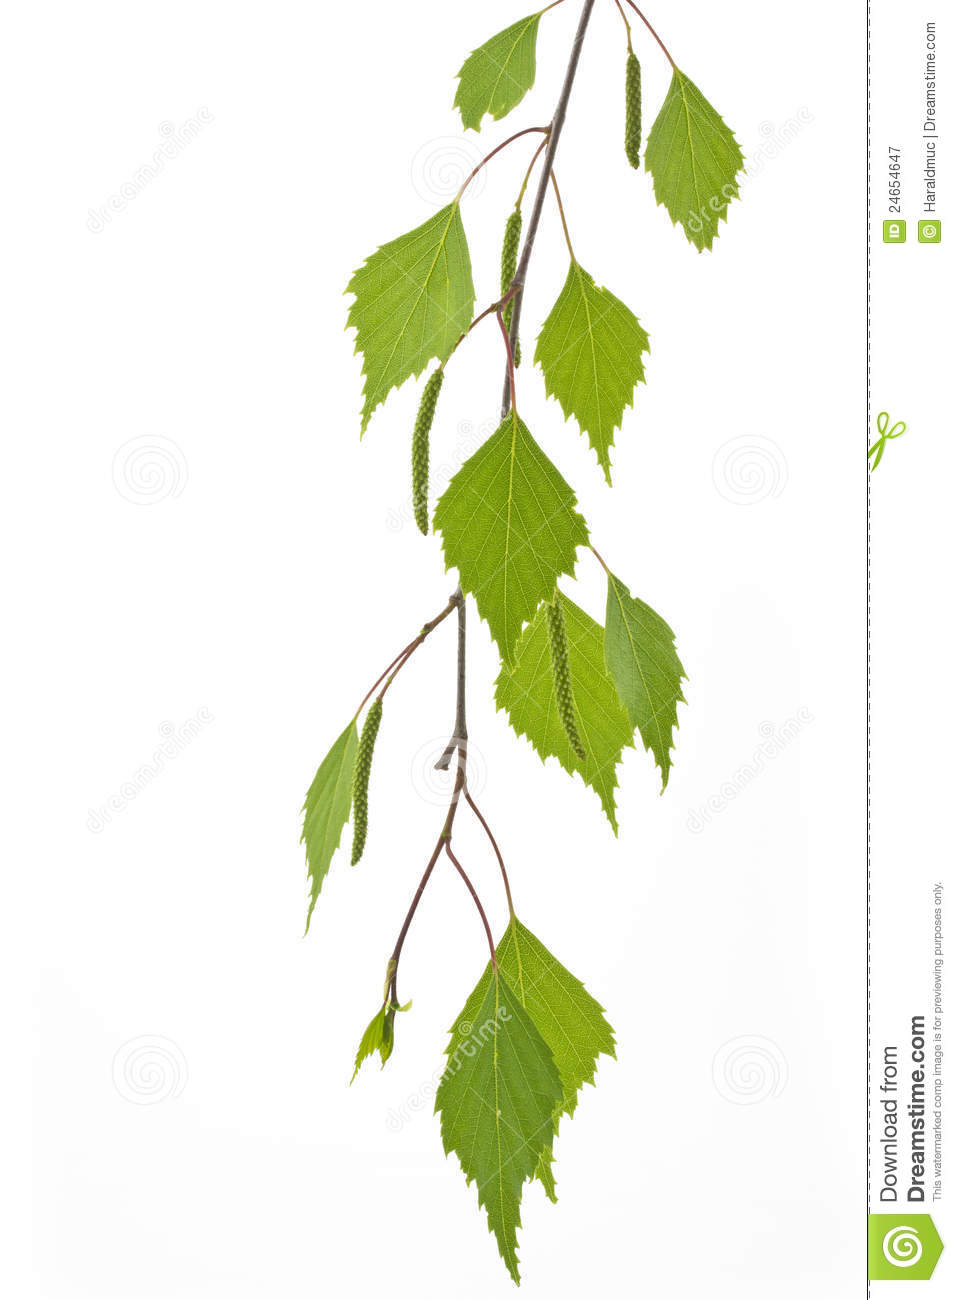 Birch leaf clipart.